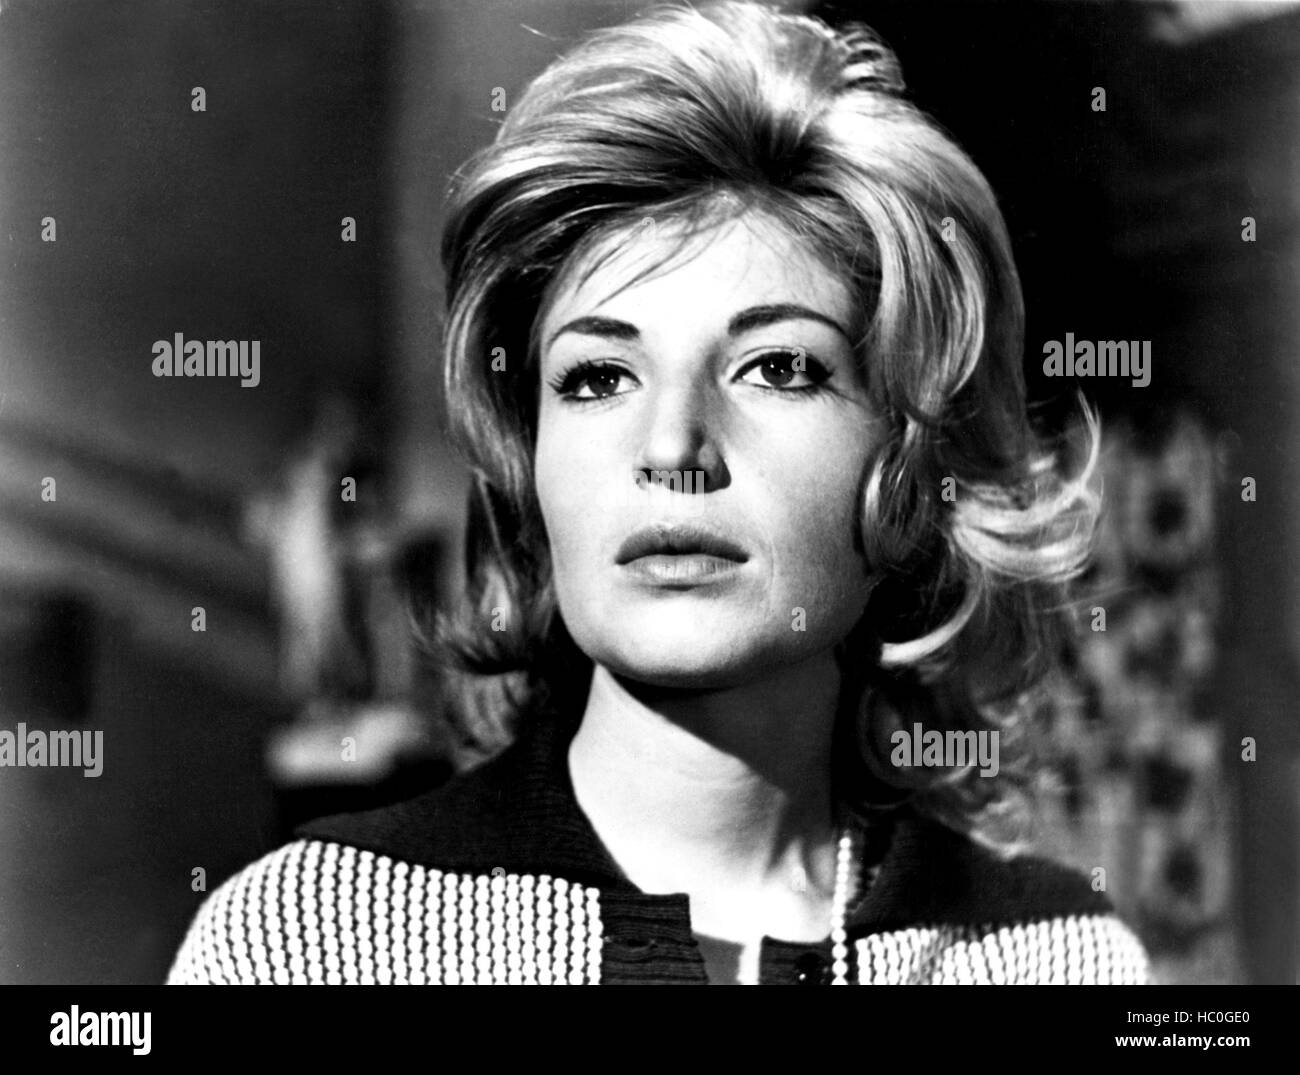 L'AVVENTURA, Monica Vitti, 1960 Stock Photo - Alamy